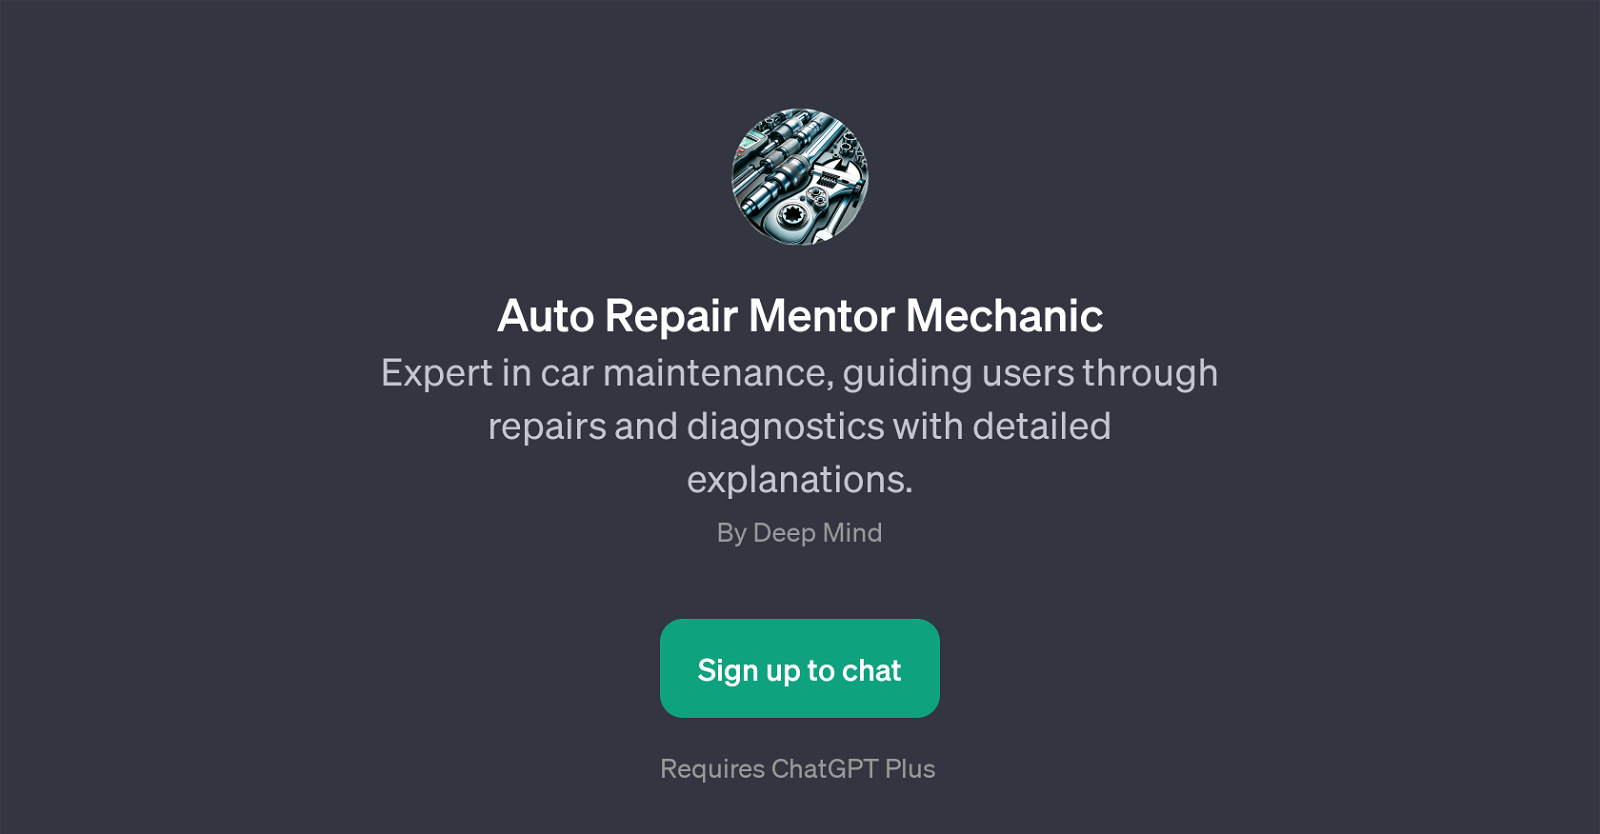 Auto Repair Mentor Mechanic website